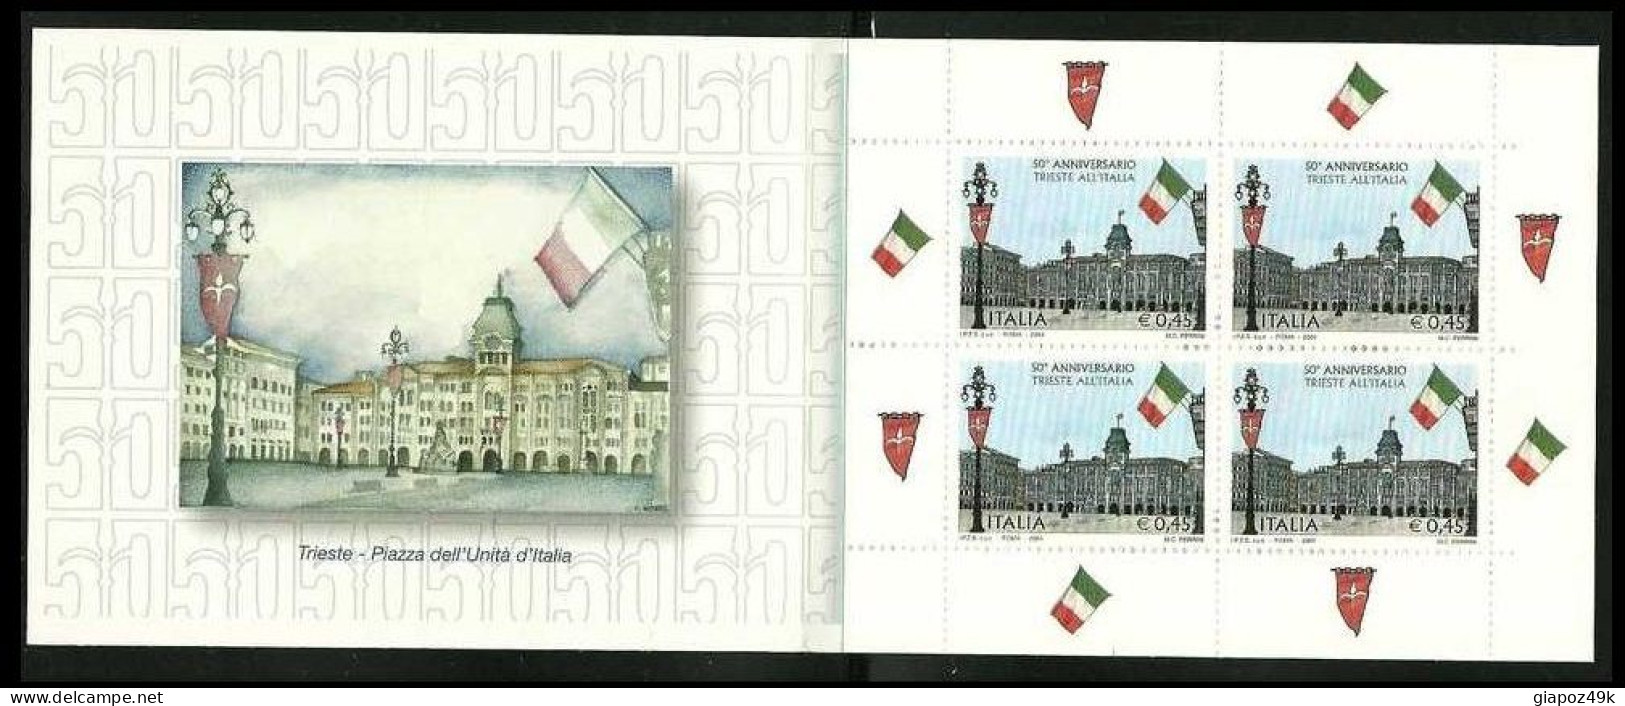 ● ITALIA  2004 ֍ TRIESTE ֍ N. 2784 **  ● LIBRETTO ● Cat. ? €  ● Lotto N. 5329 ● - Postzegelboekjes